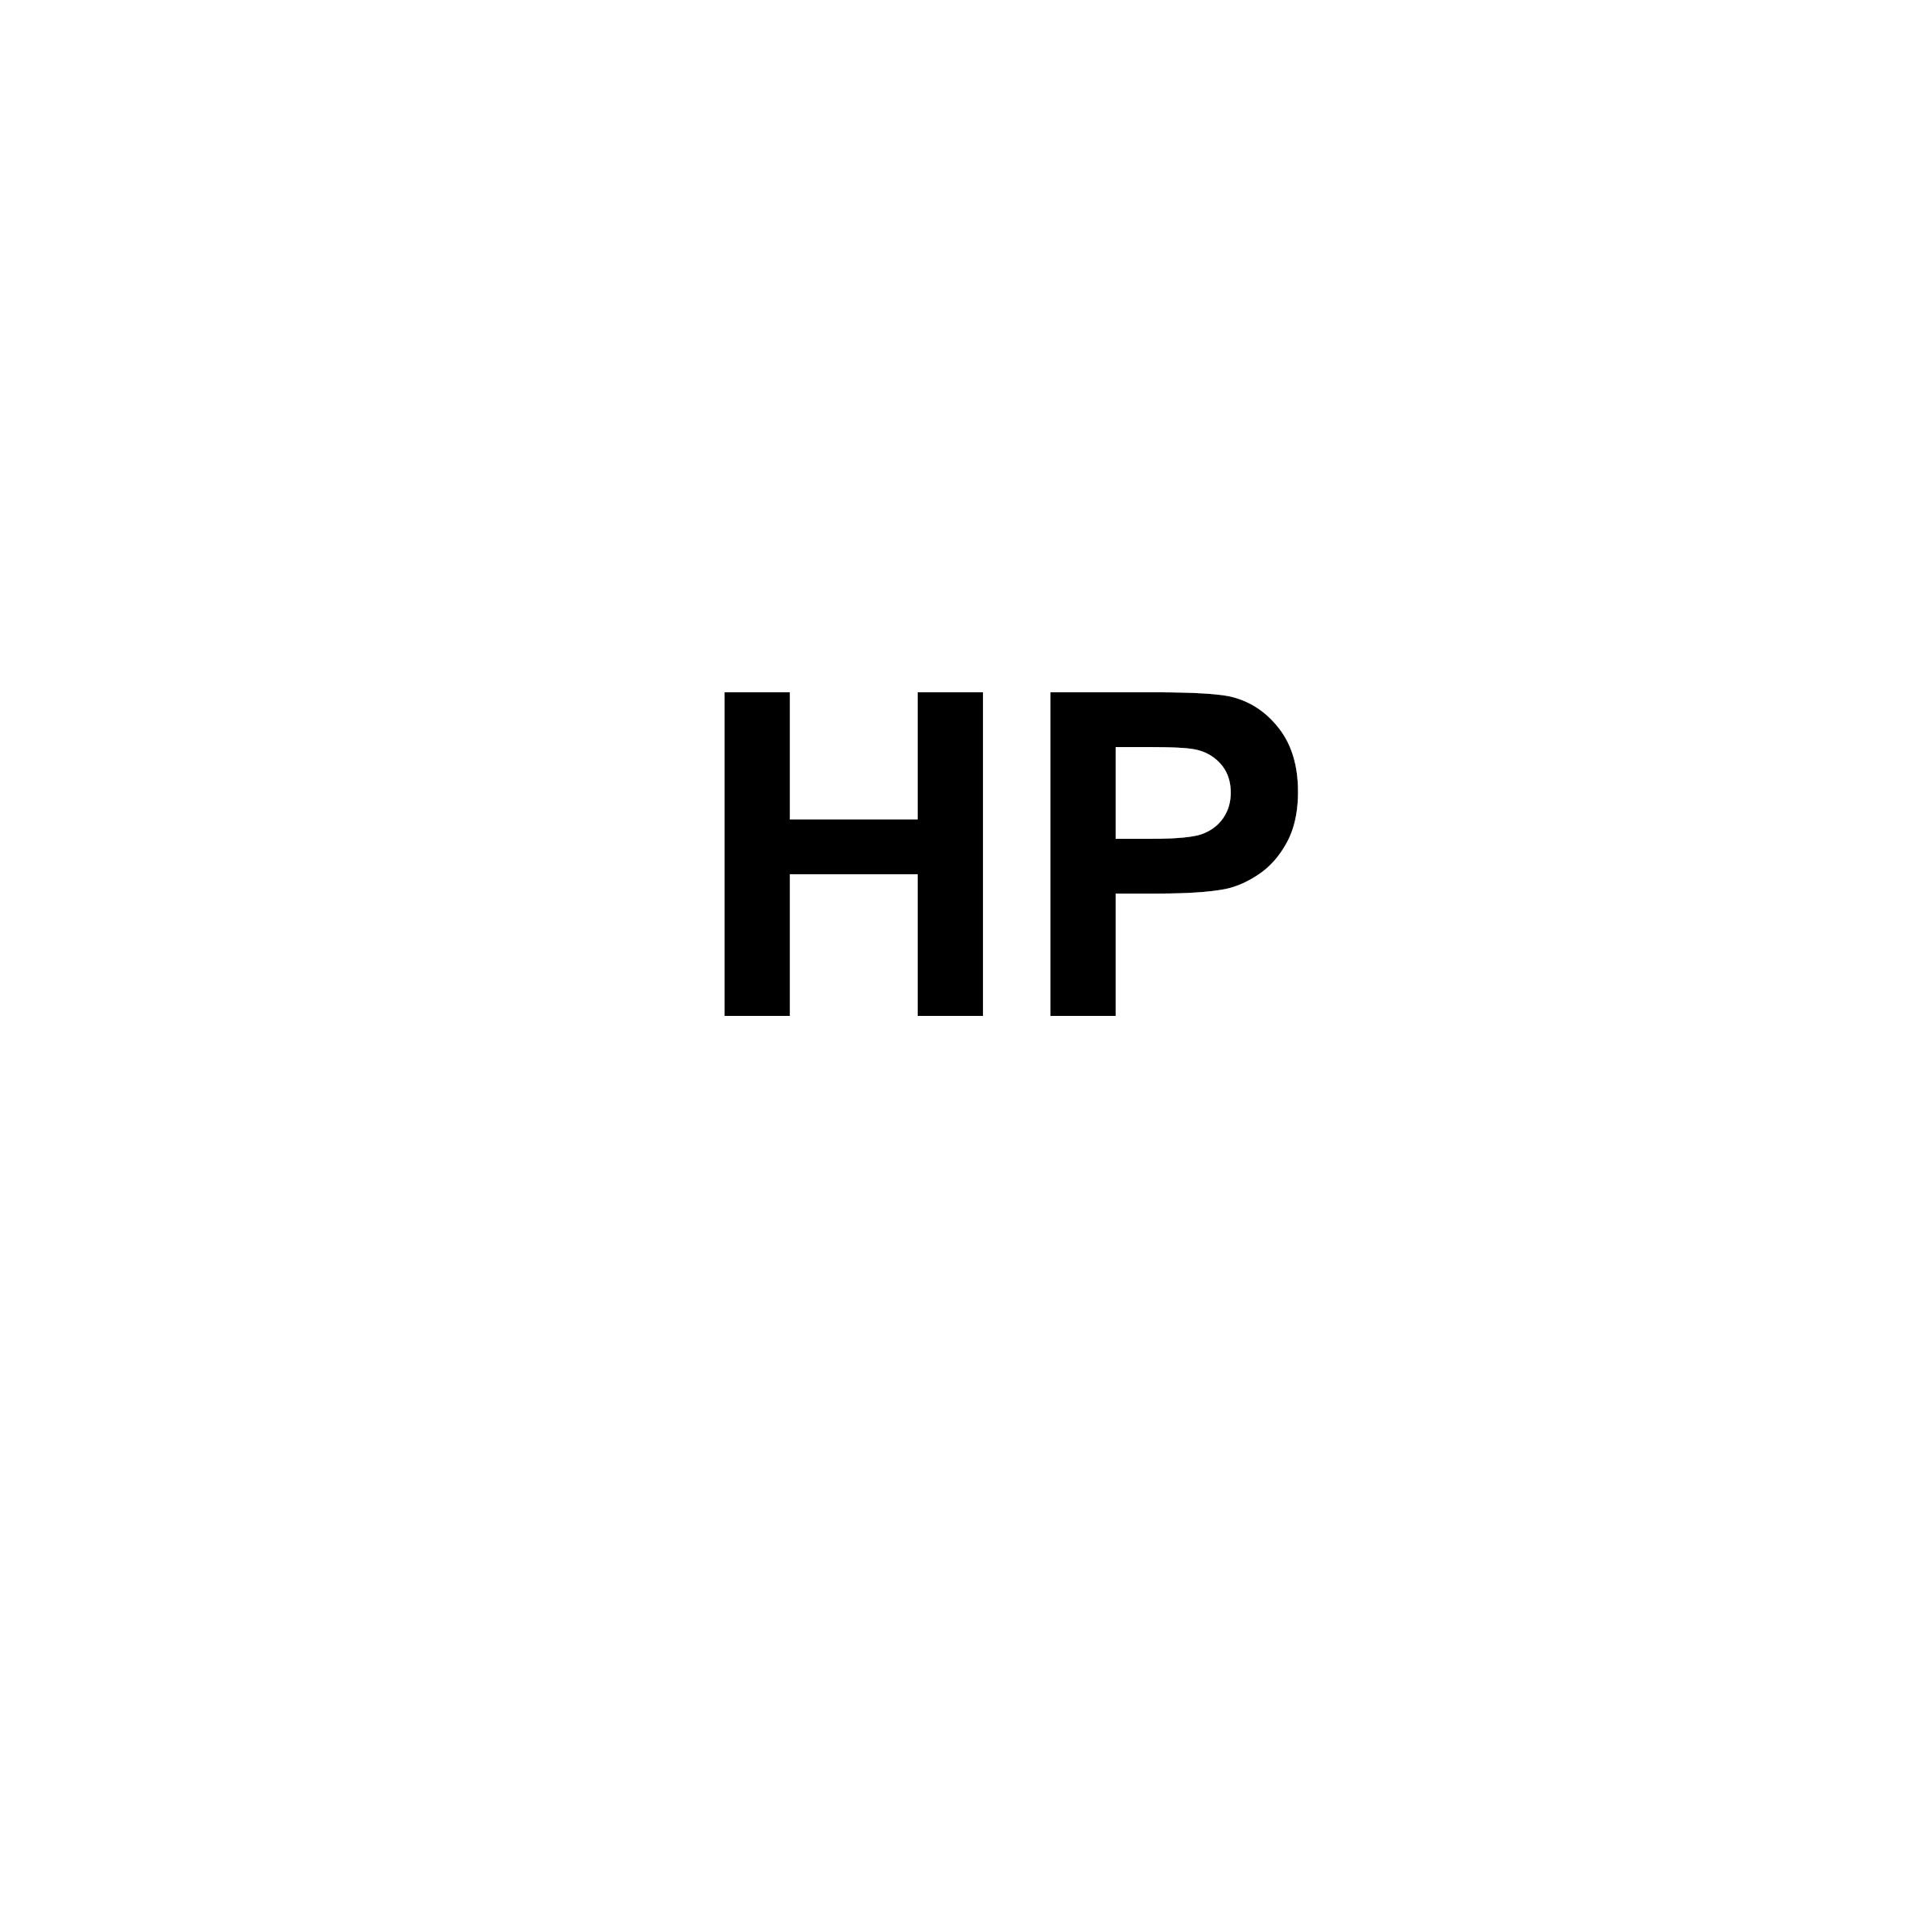 Shop By Printer / Hewlett Packard Printer Products